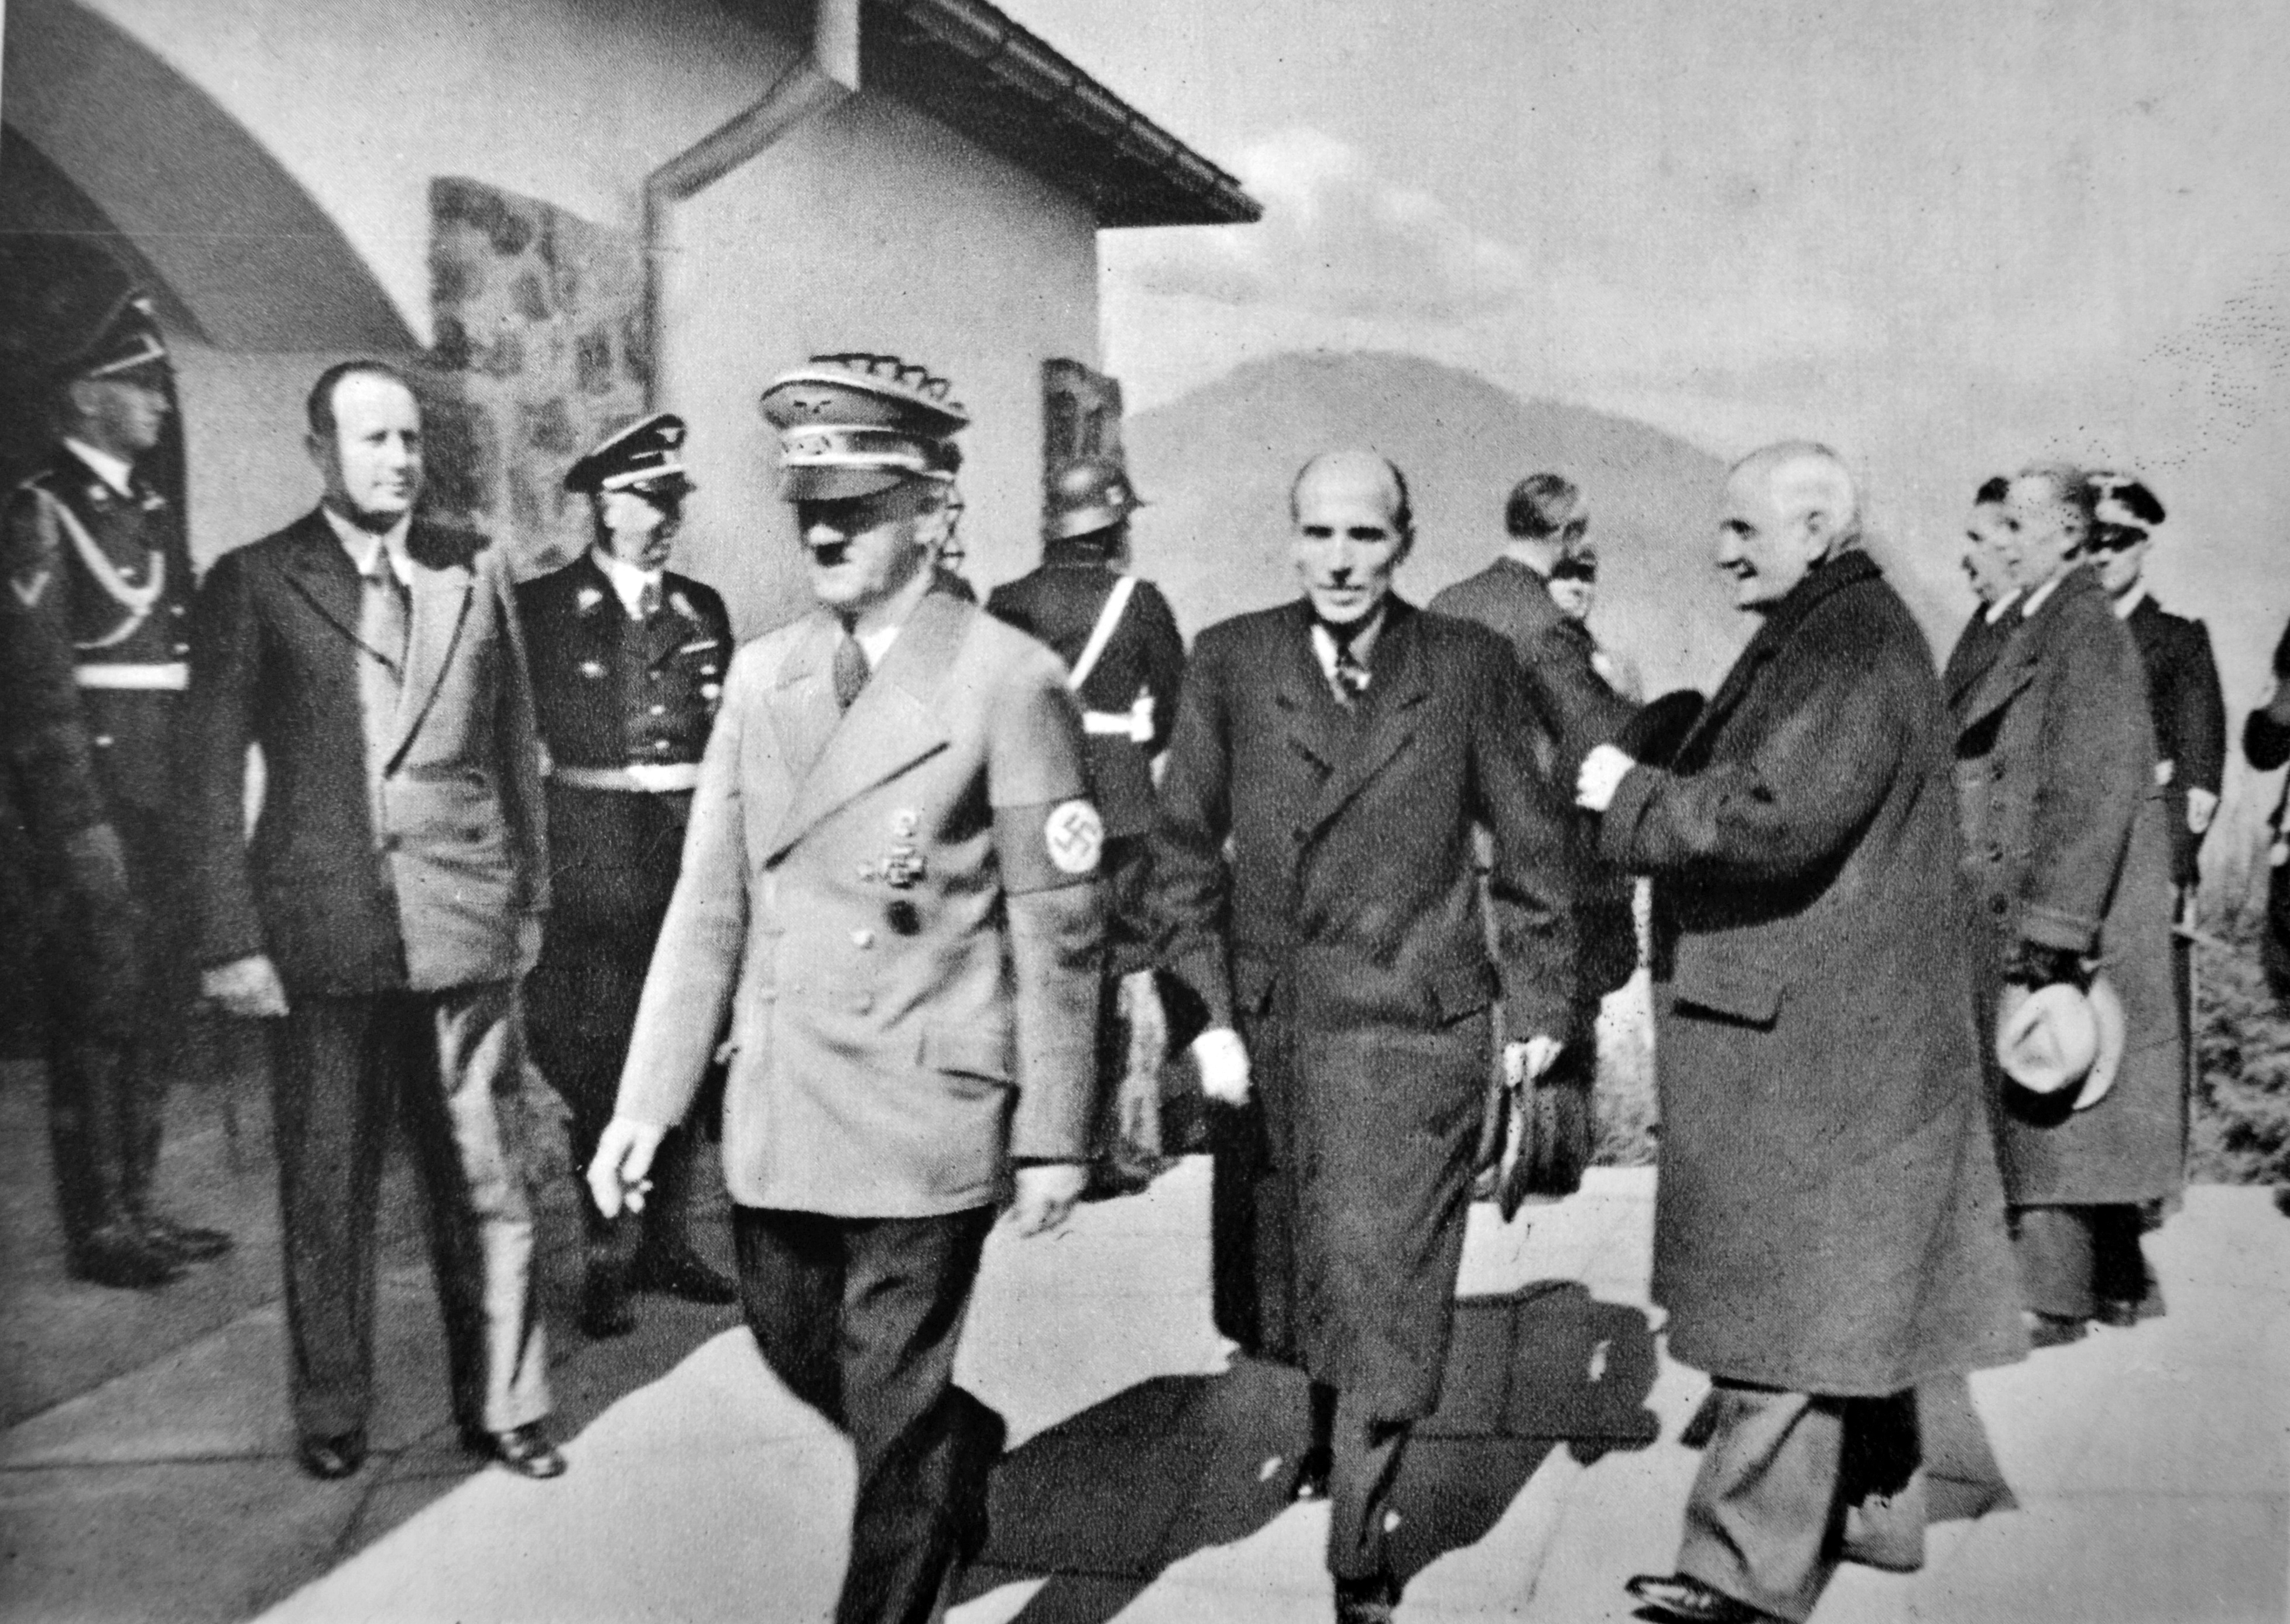 Adolf Hitler welcomes Prime Minister of Hungary Bela Imredy and Foreign Minister Kalman de Kanya at the Berghof